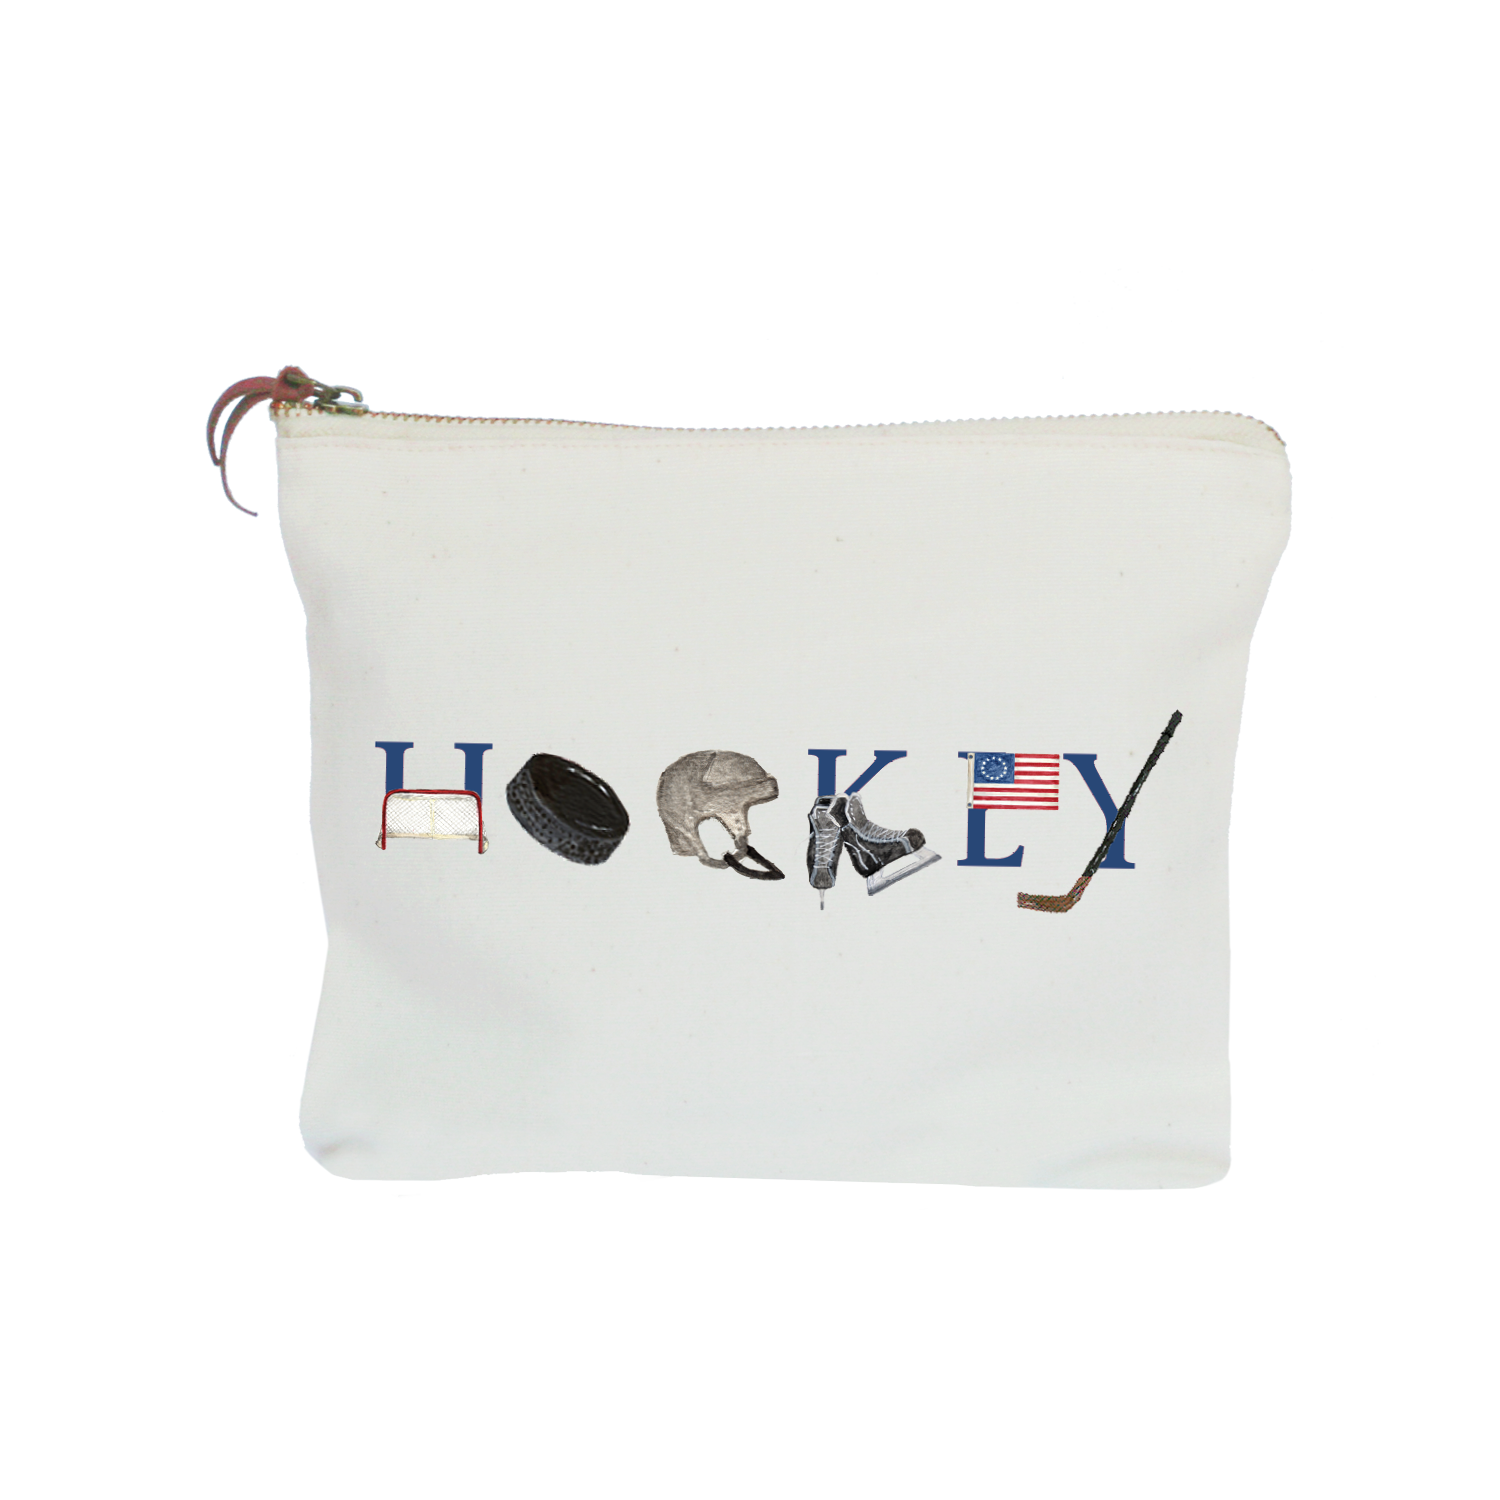 Hockey zipper pouch